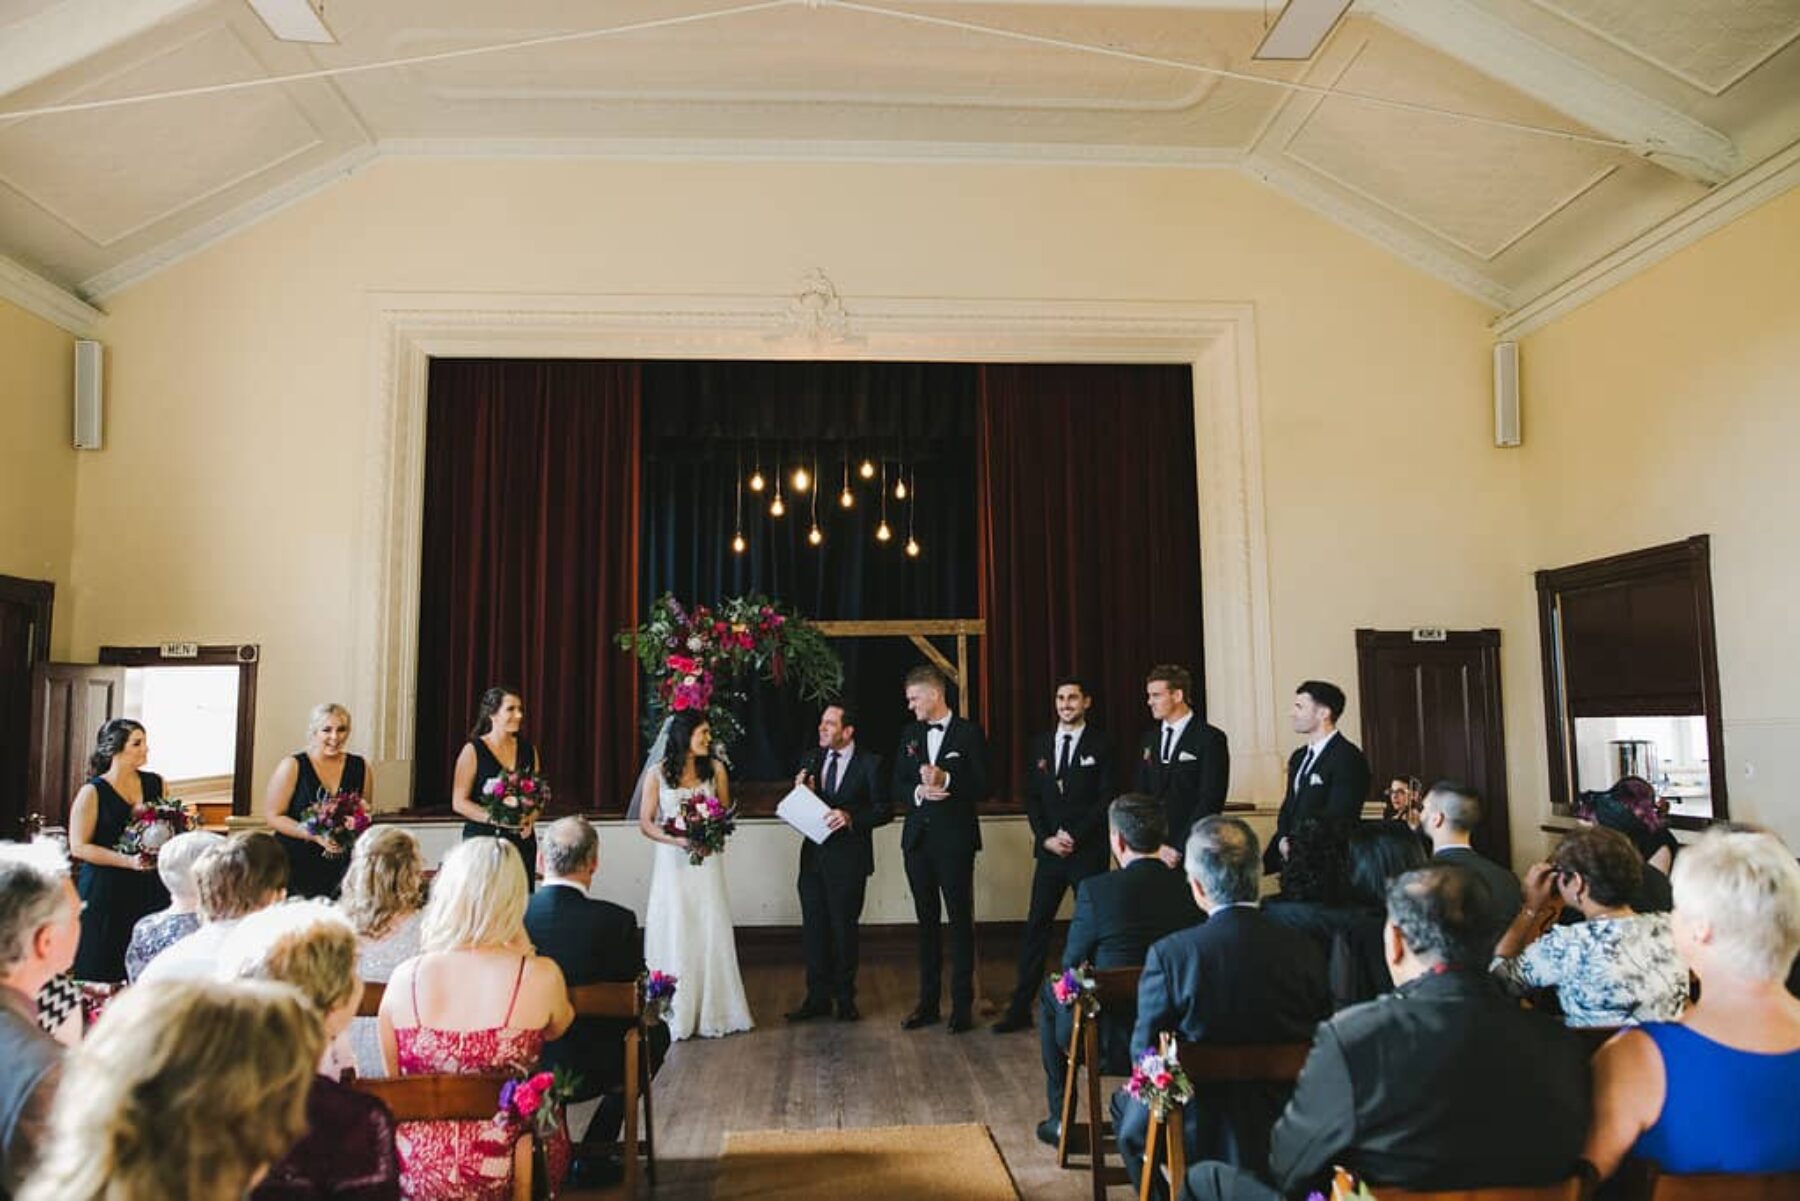 North Perth Town Hall wedding - photography by Amanda Alessi